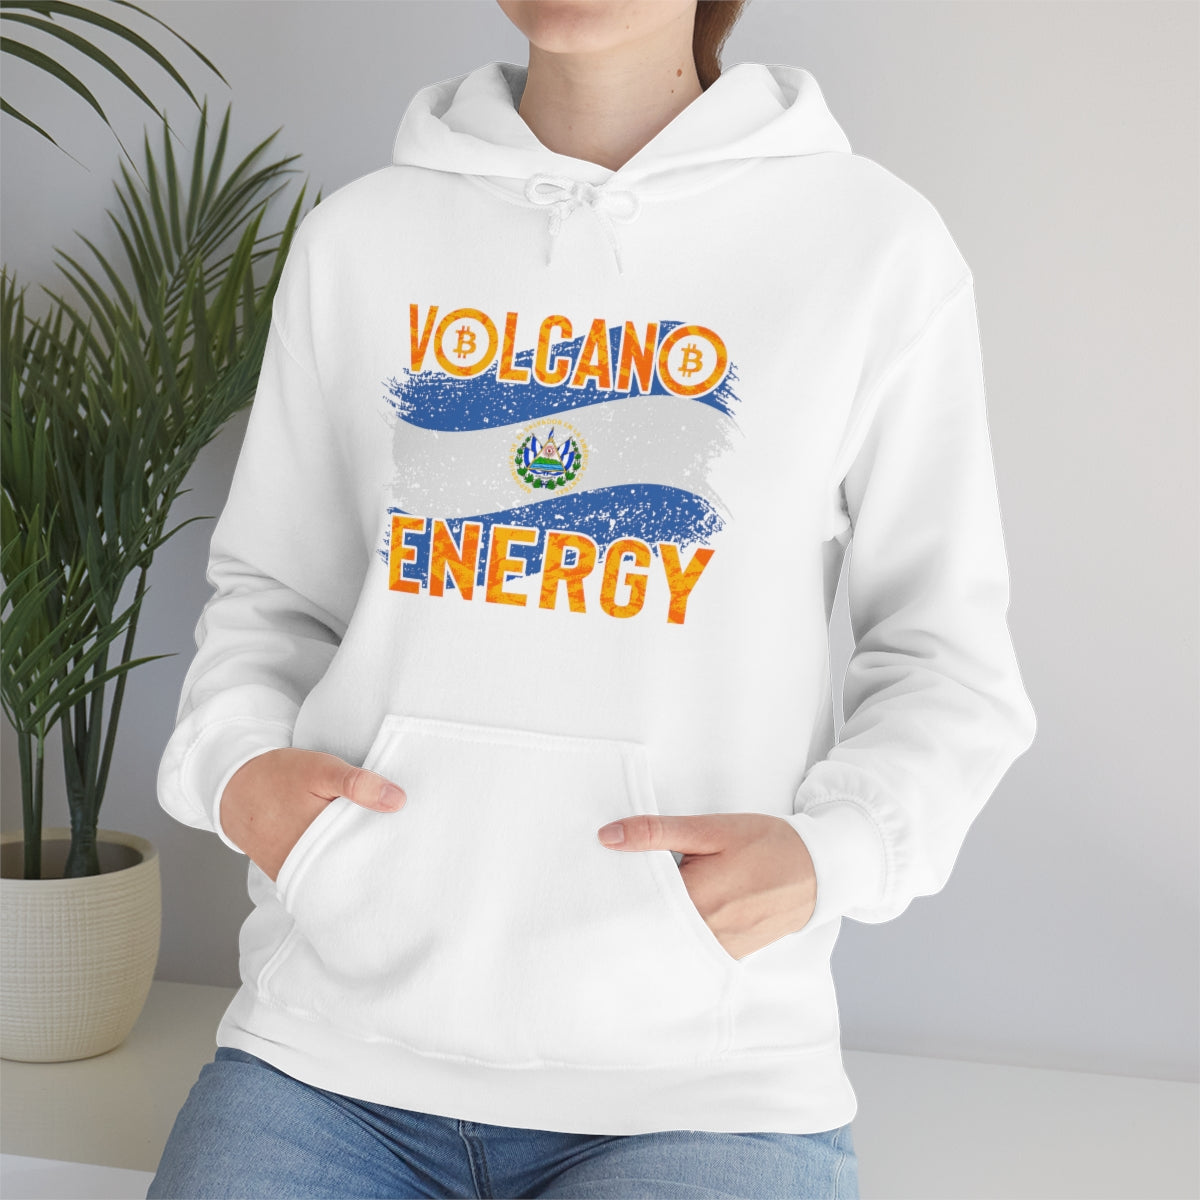 Volcano Energy 2.0 Hoodie